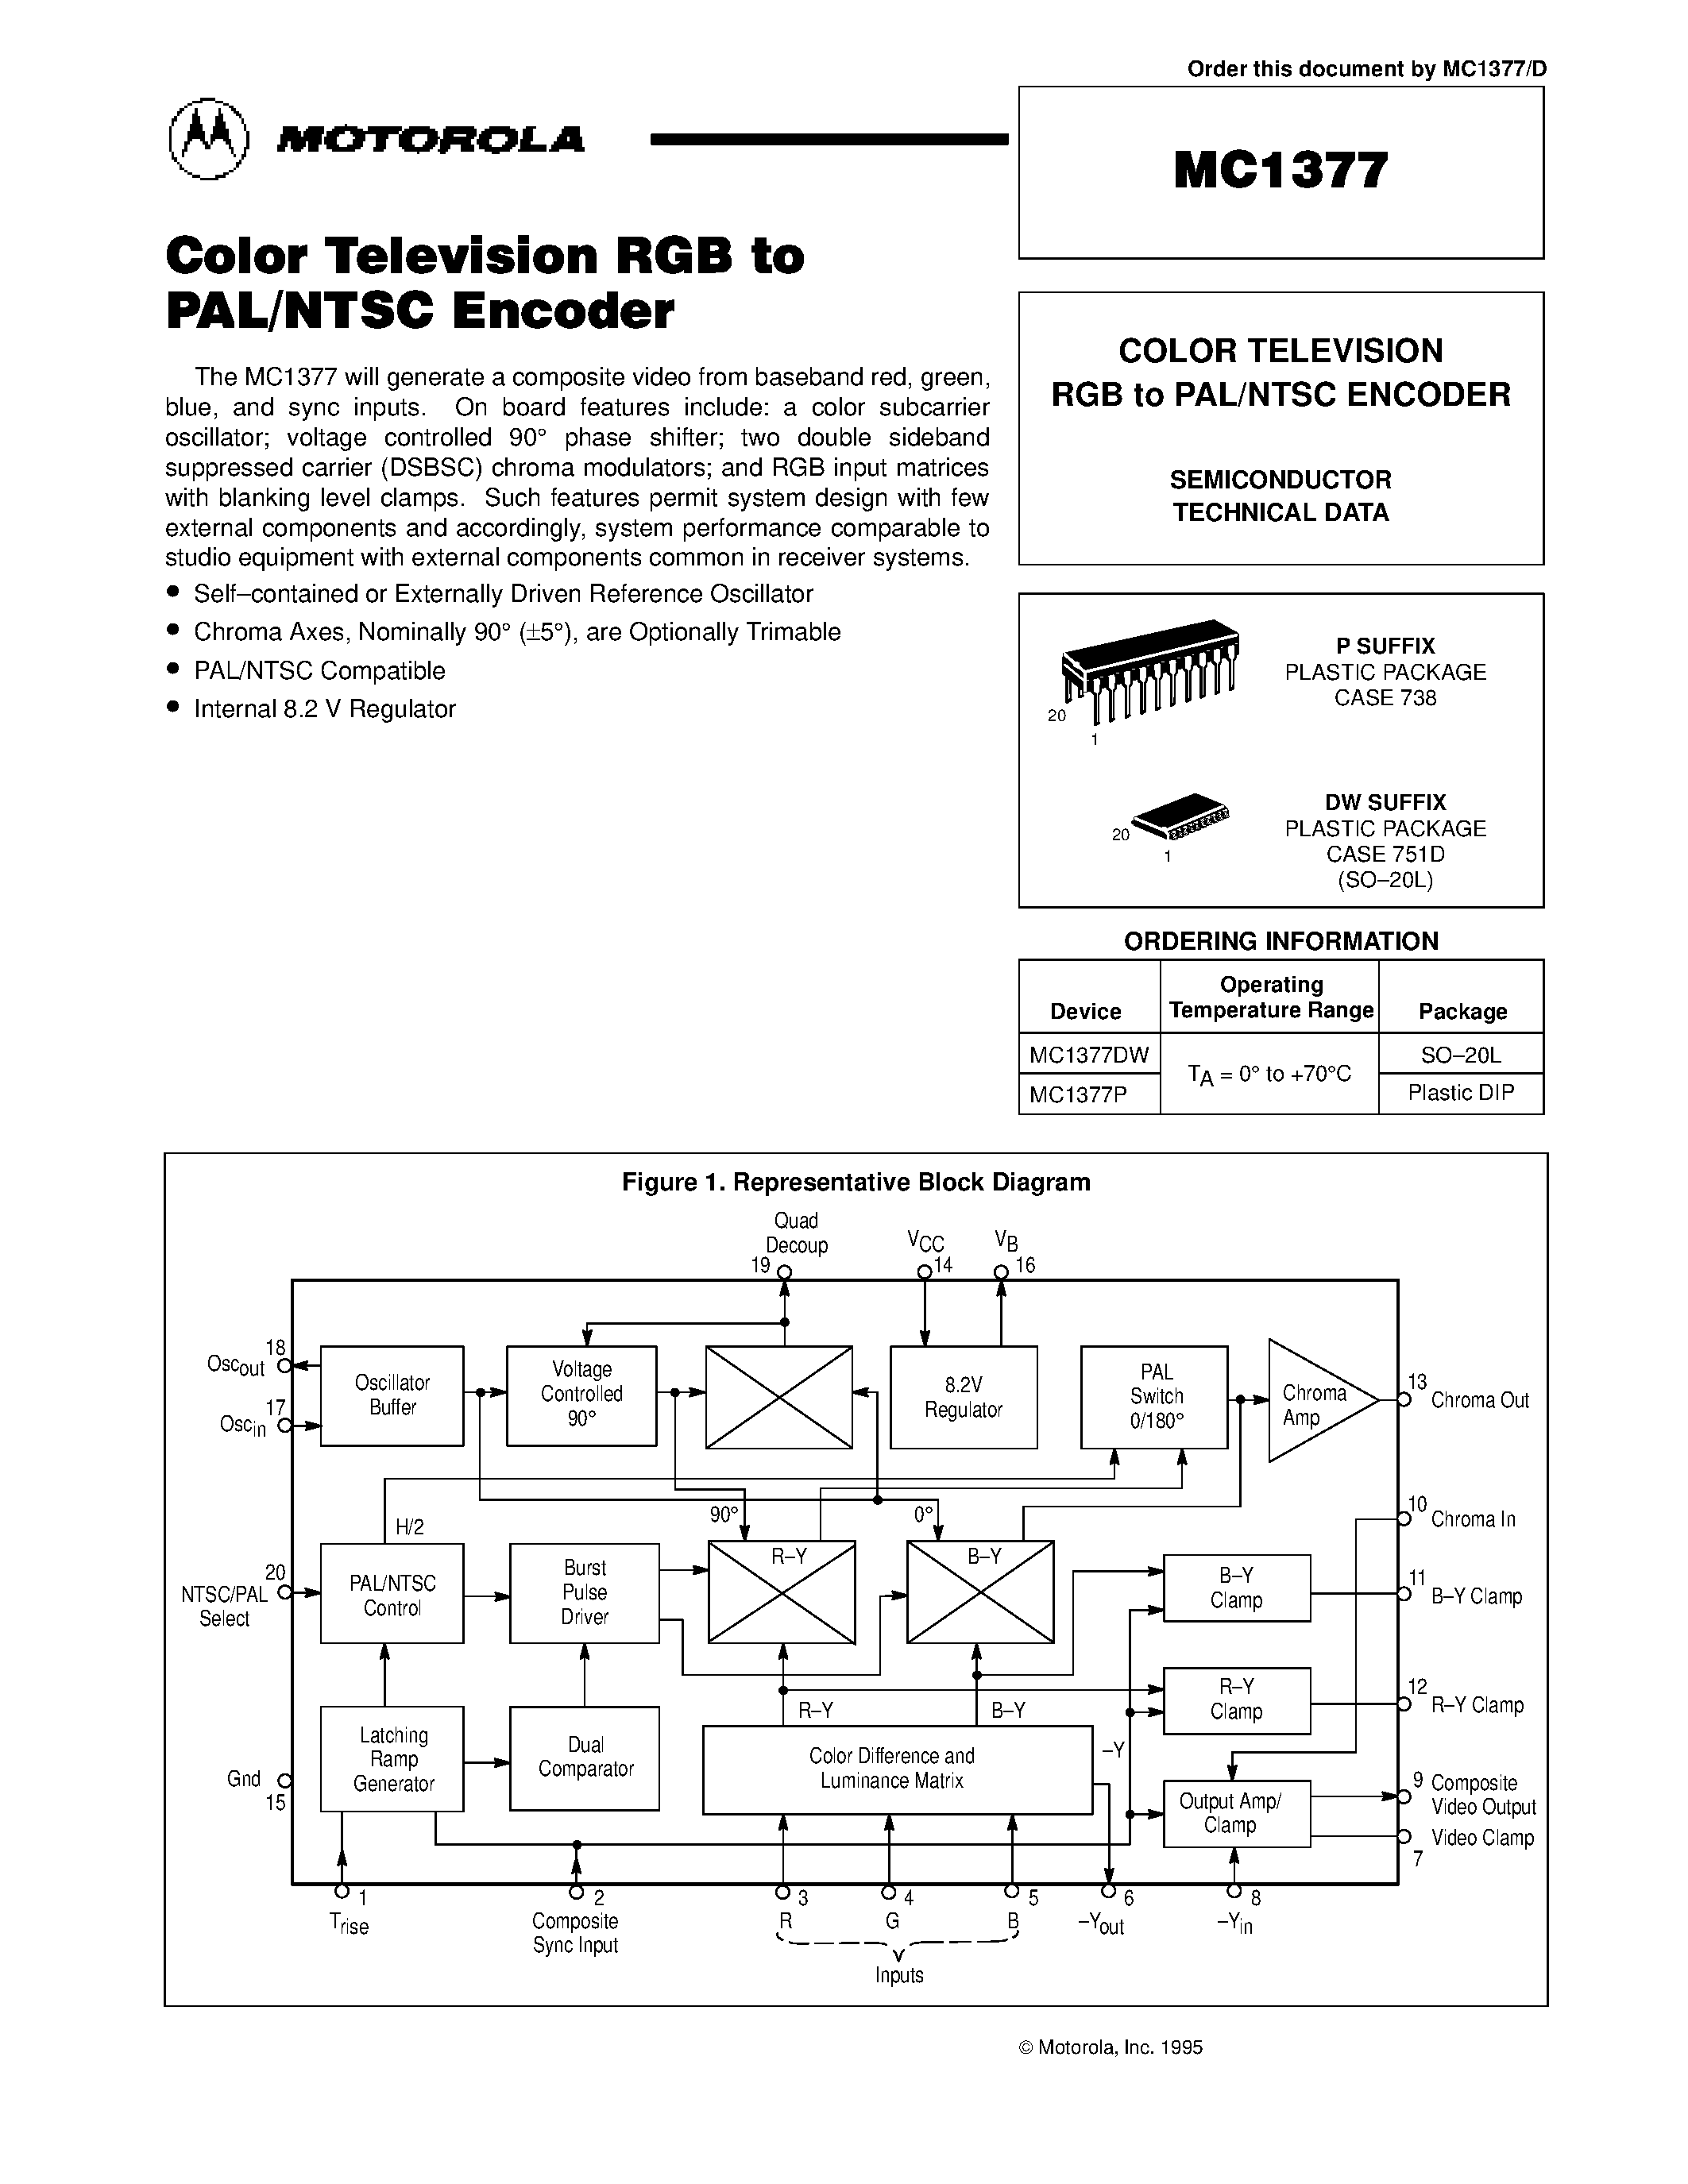 Datasheet MC1377 - COLOR TELEVISION RGB to PAL/NTSC ENCODER page 1